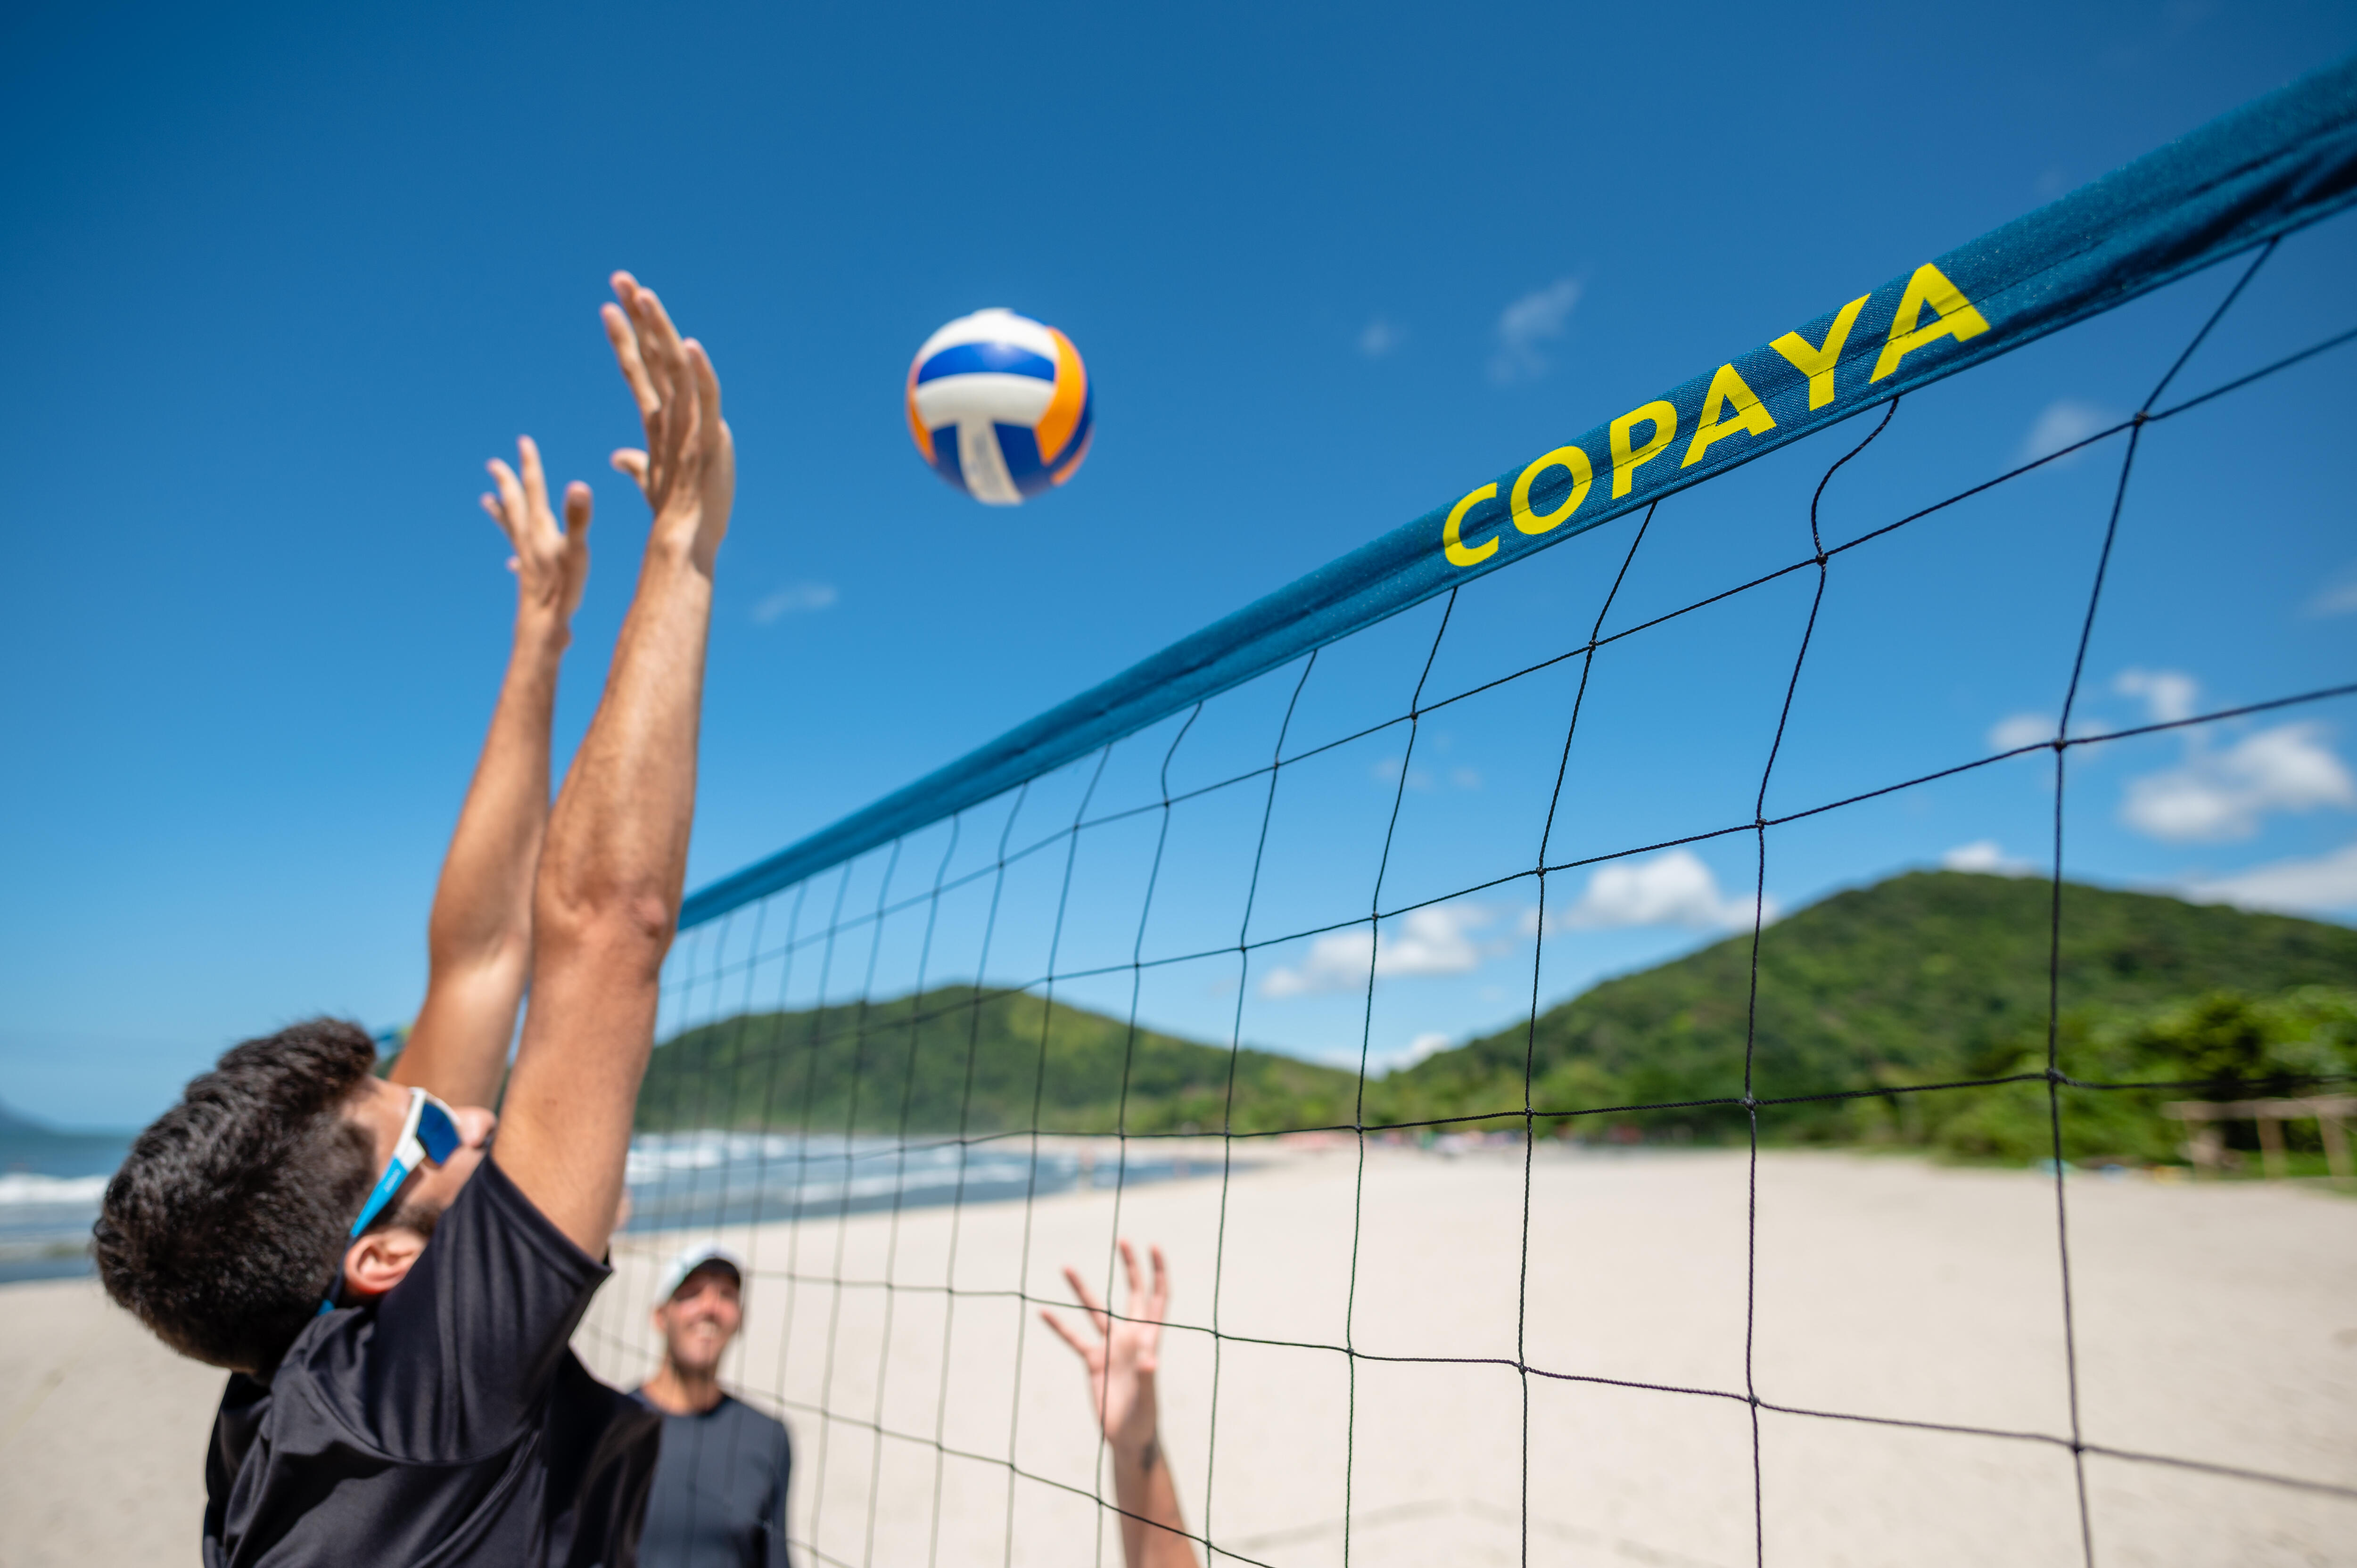 Beach Volleyball Net - BV 500 - COPAYA